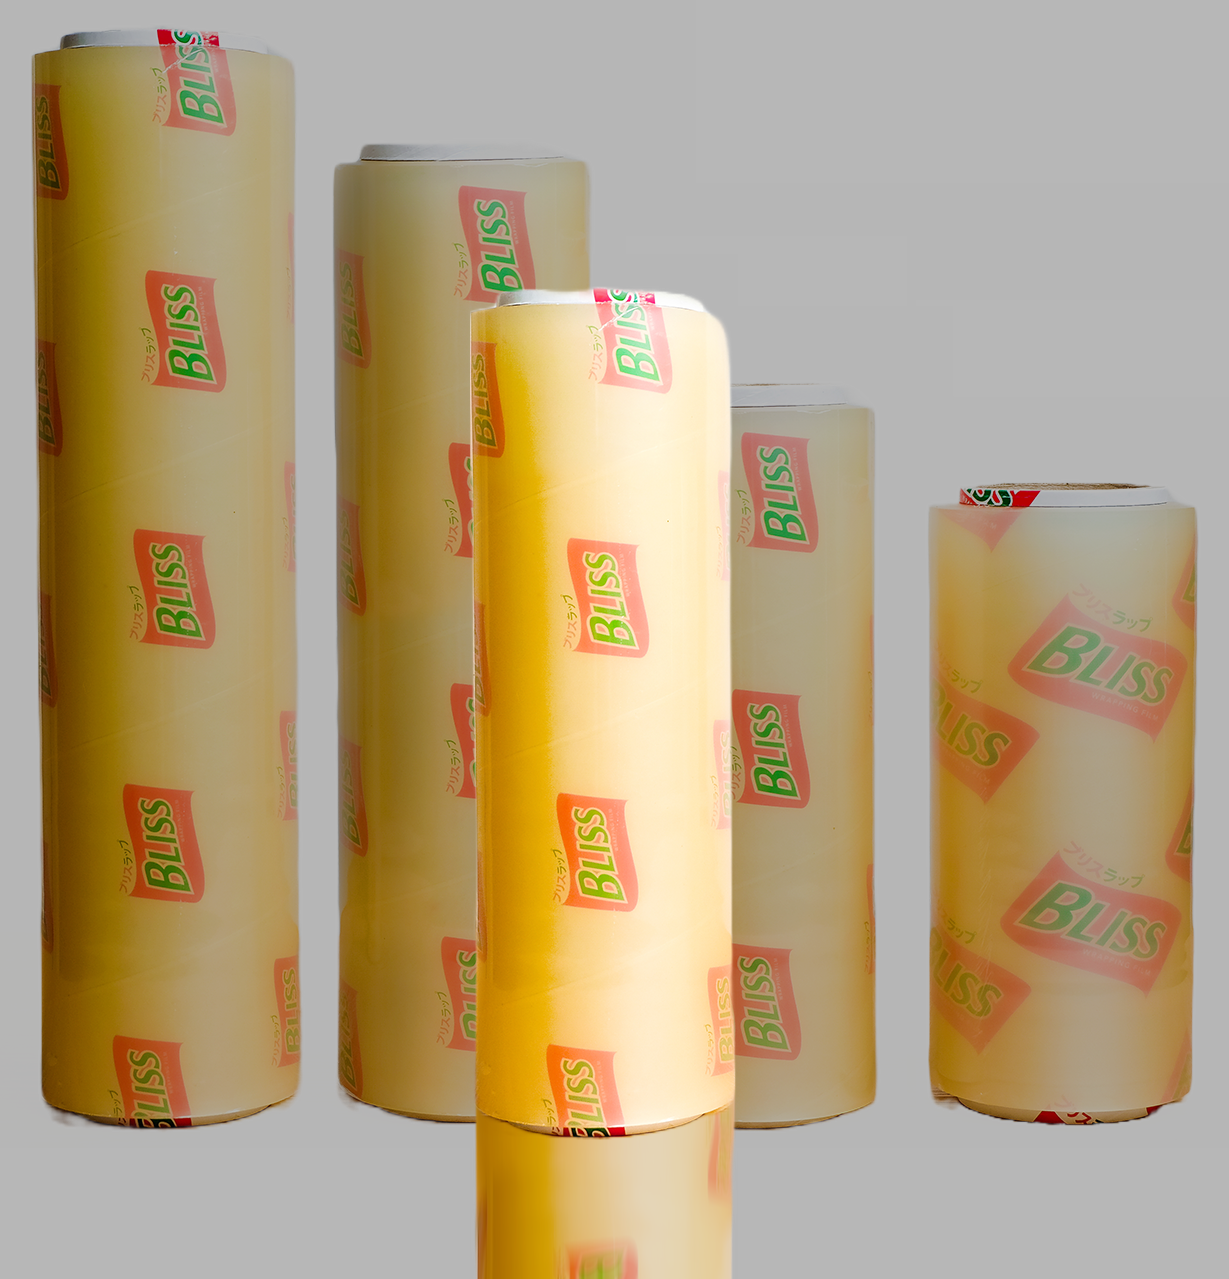 Bliss PVC Cling Wrap Plastik ukuran lebar 35cm. plastik pvc cling wrap terbaik lebih murah dan berkualitas dari best fresh, total, raypin bermerk bliss